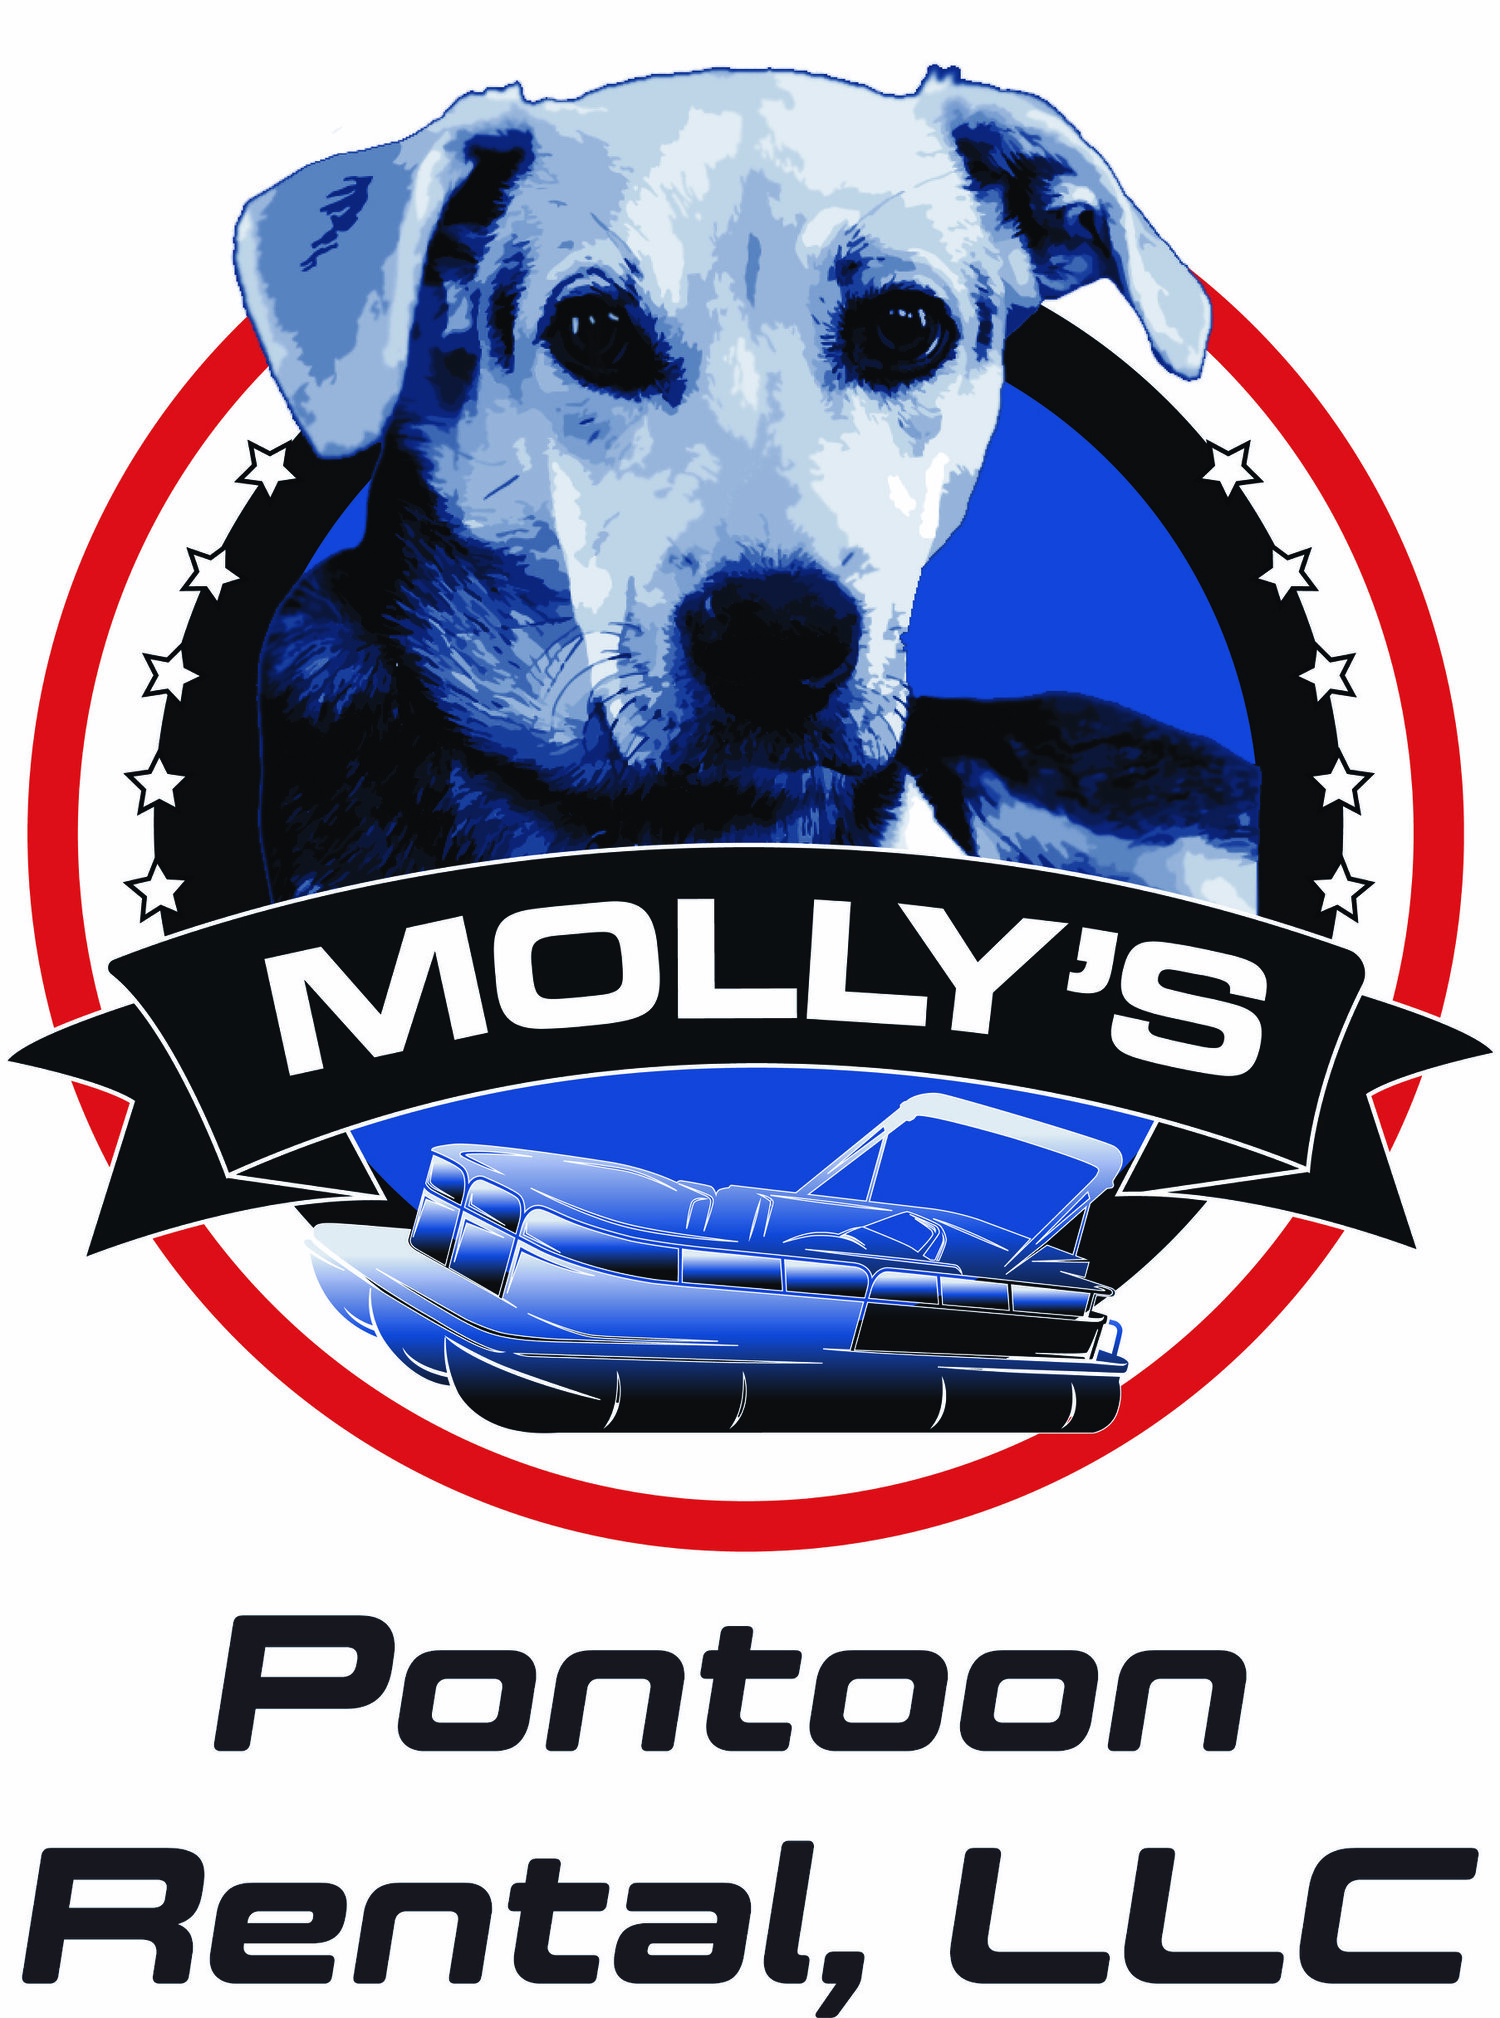 Molly&#39;s Pontoon Rentals, LLC